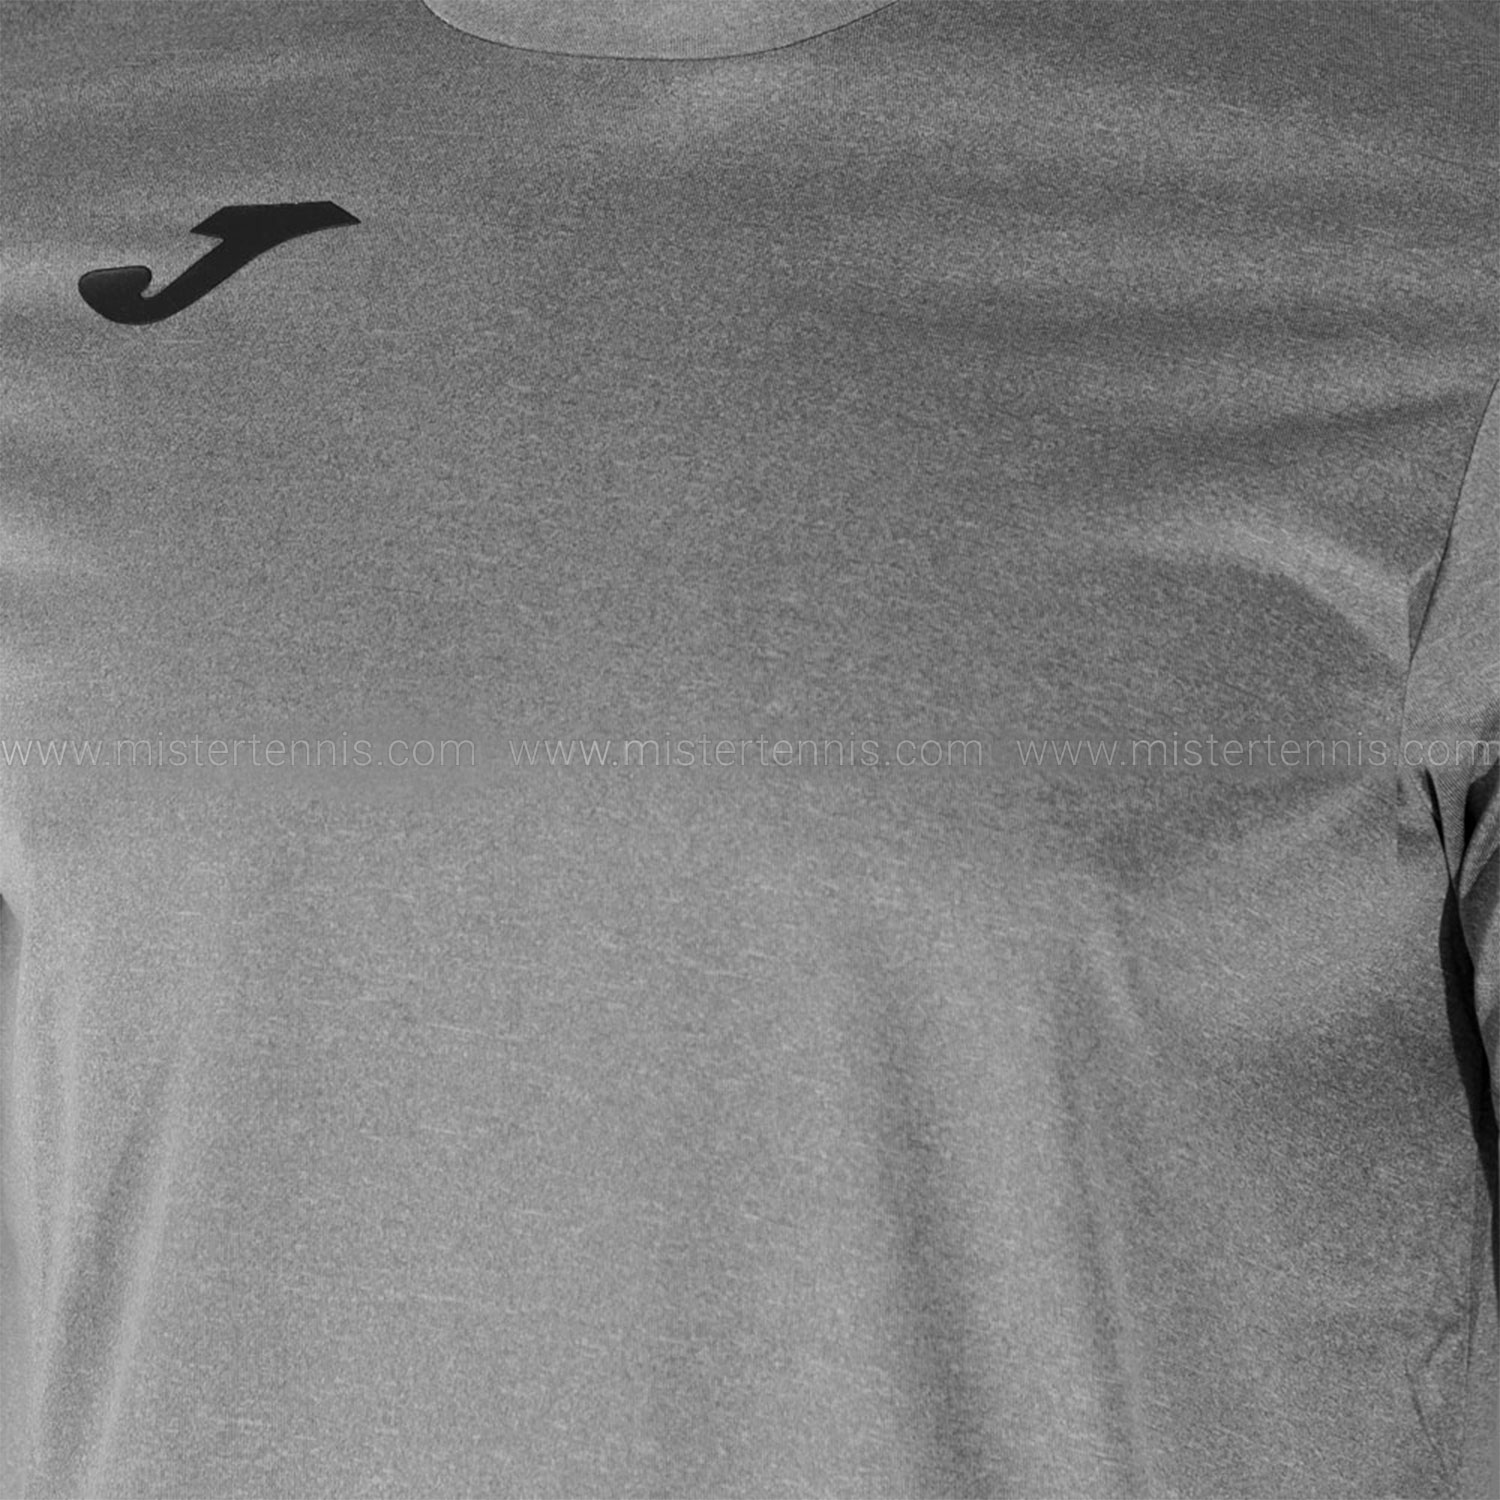 Joma Combi Camiseta Niño - Light Grey Melange